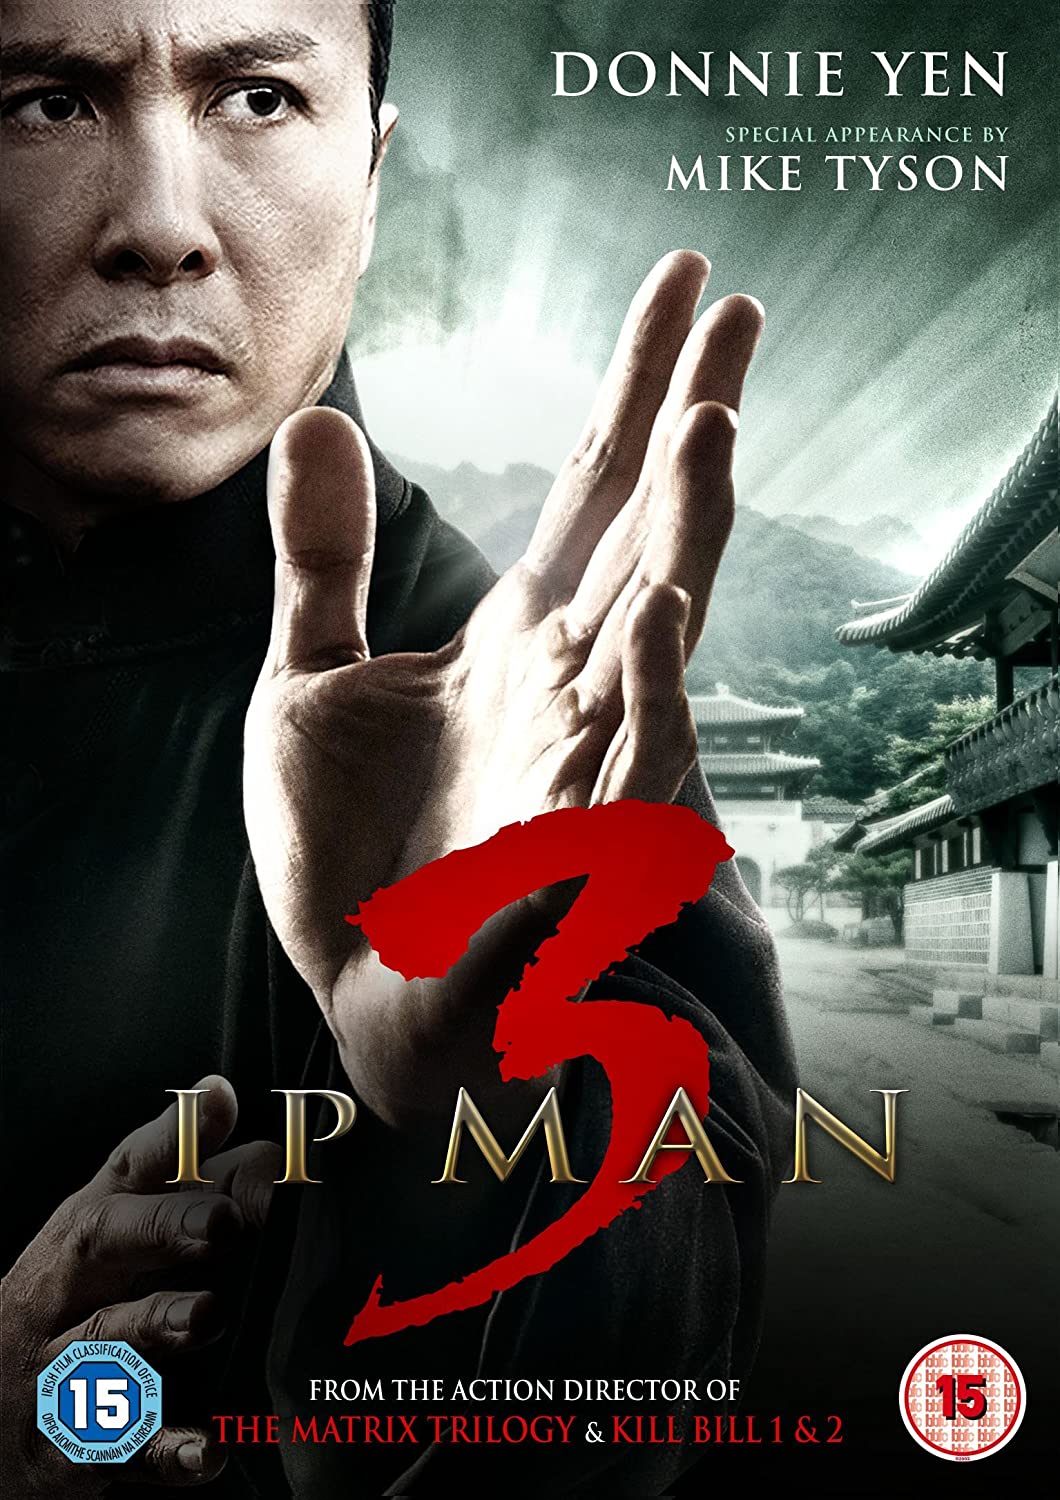 IP Man 3 [Region-Free] [2017] - Action/Martial Arts [DVD]